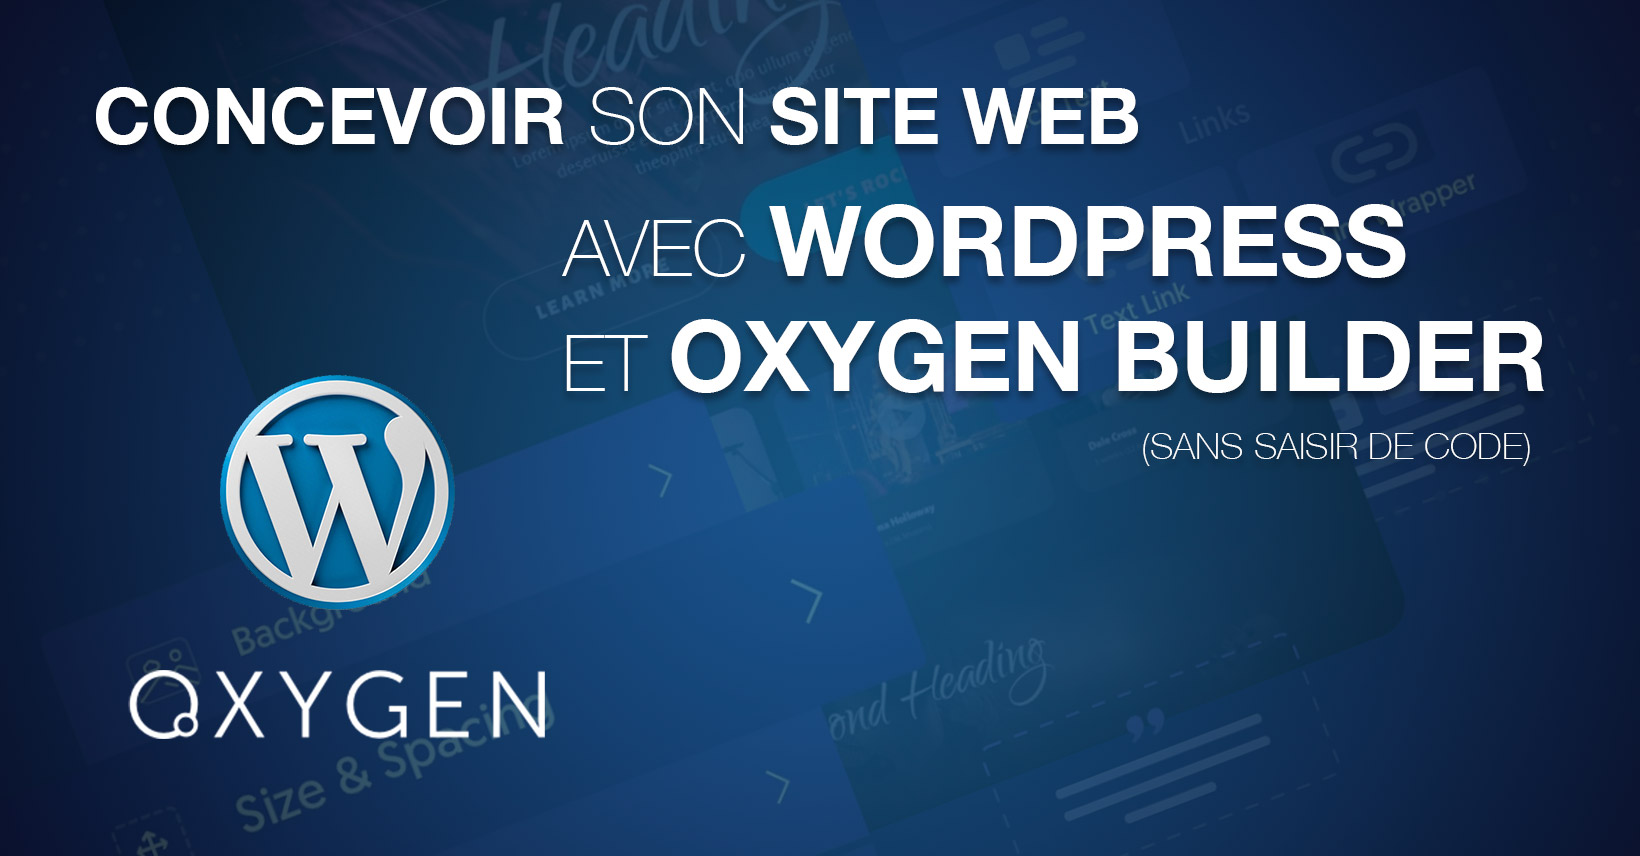 Apprendre Wordpress et oxygen builder avec cette formation en ligne